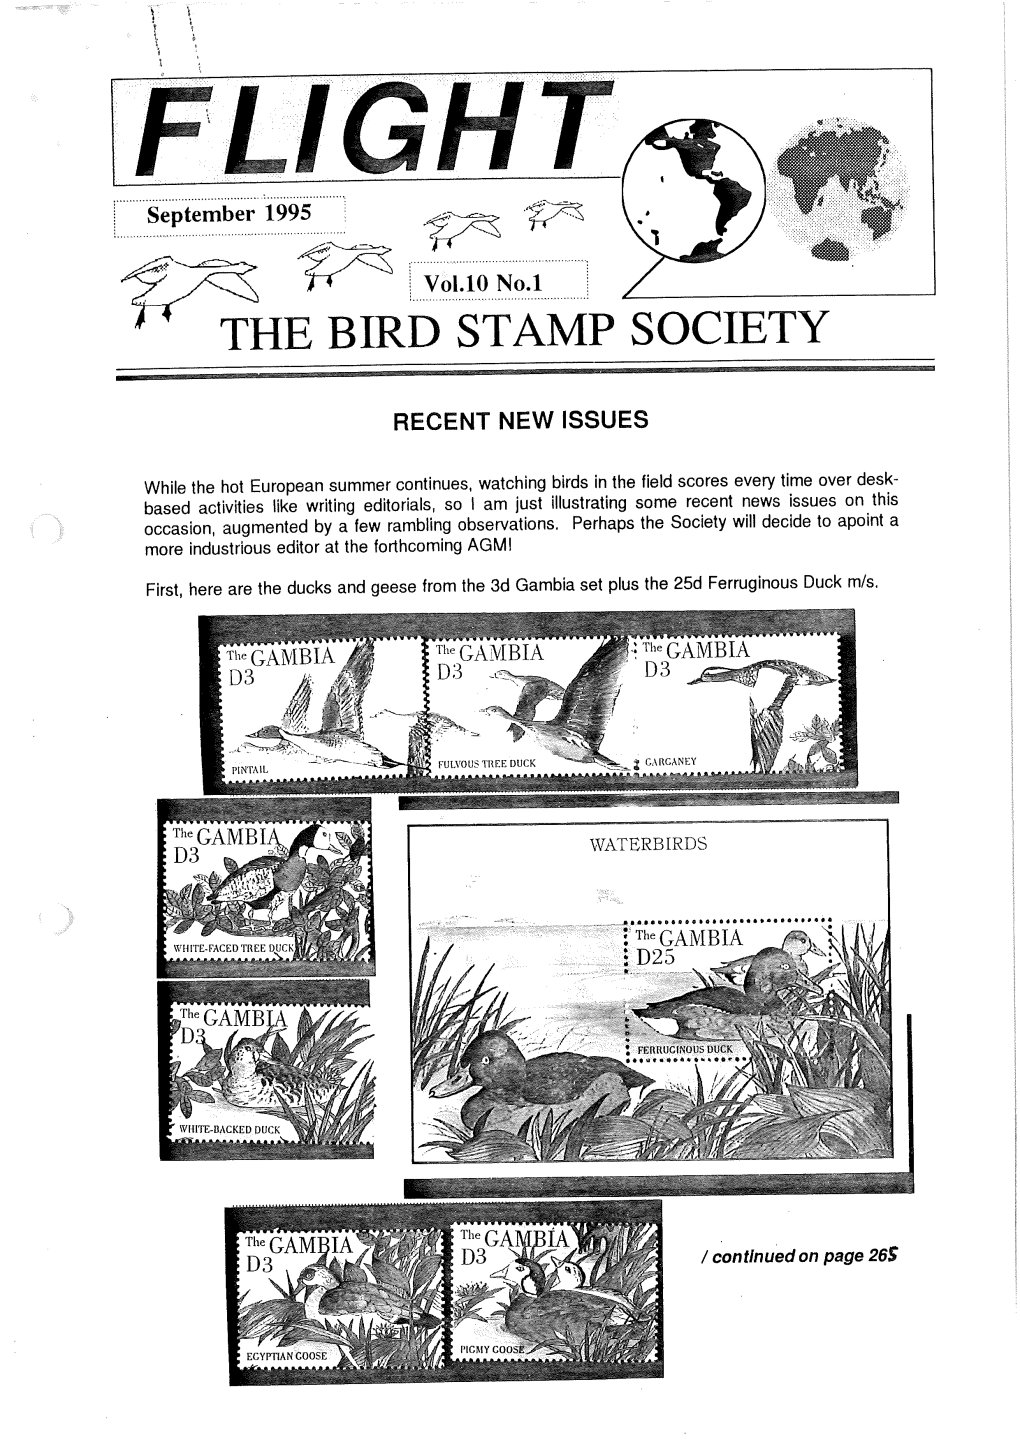 The Bird Stamp Societ